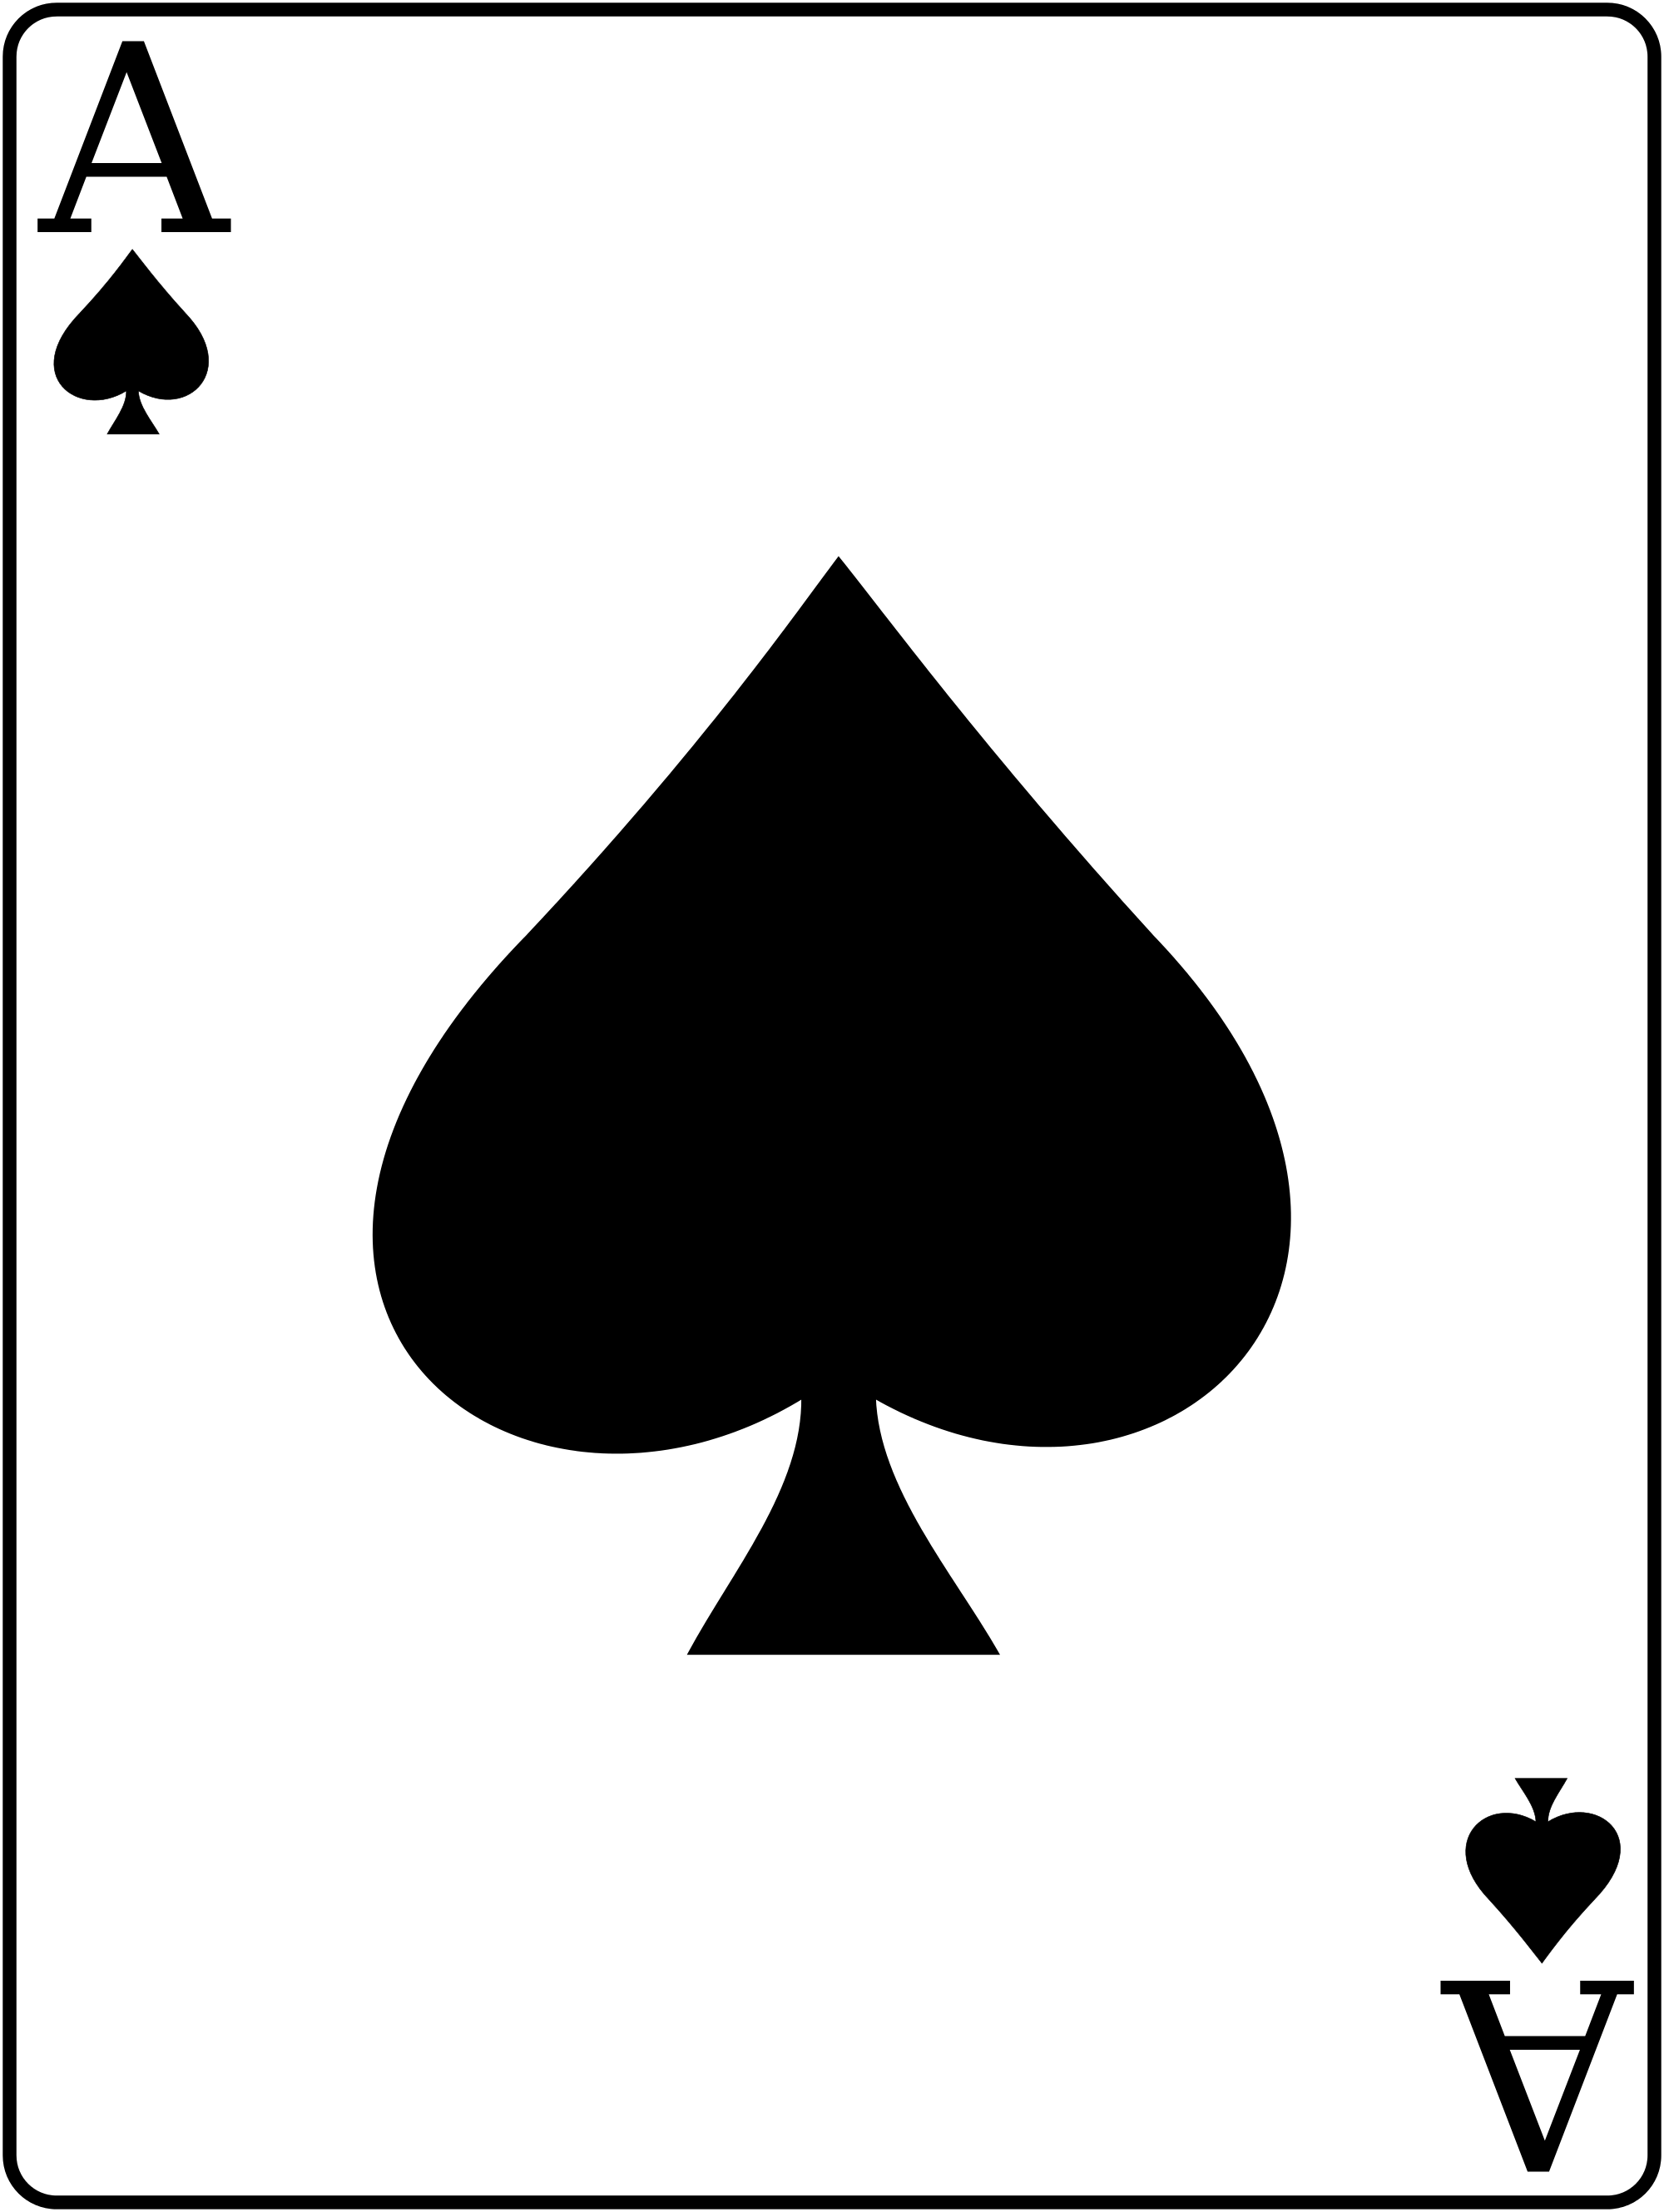 Spades - Wikipedia, the free encyclopedia